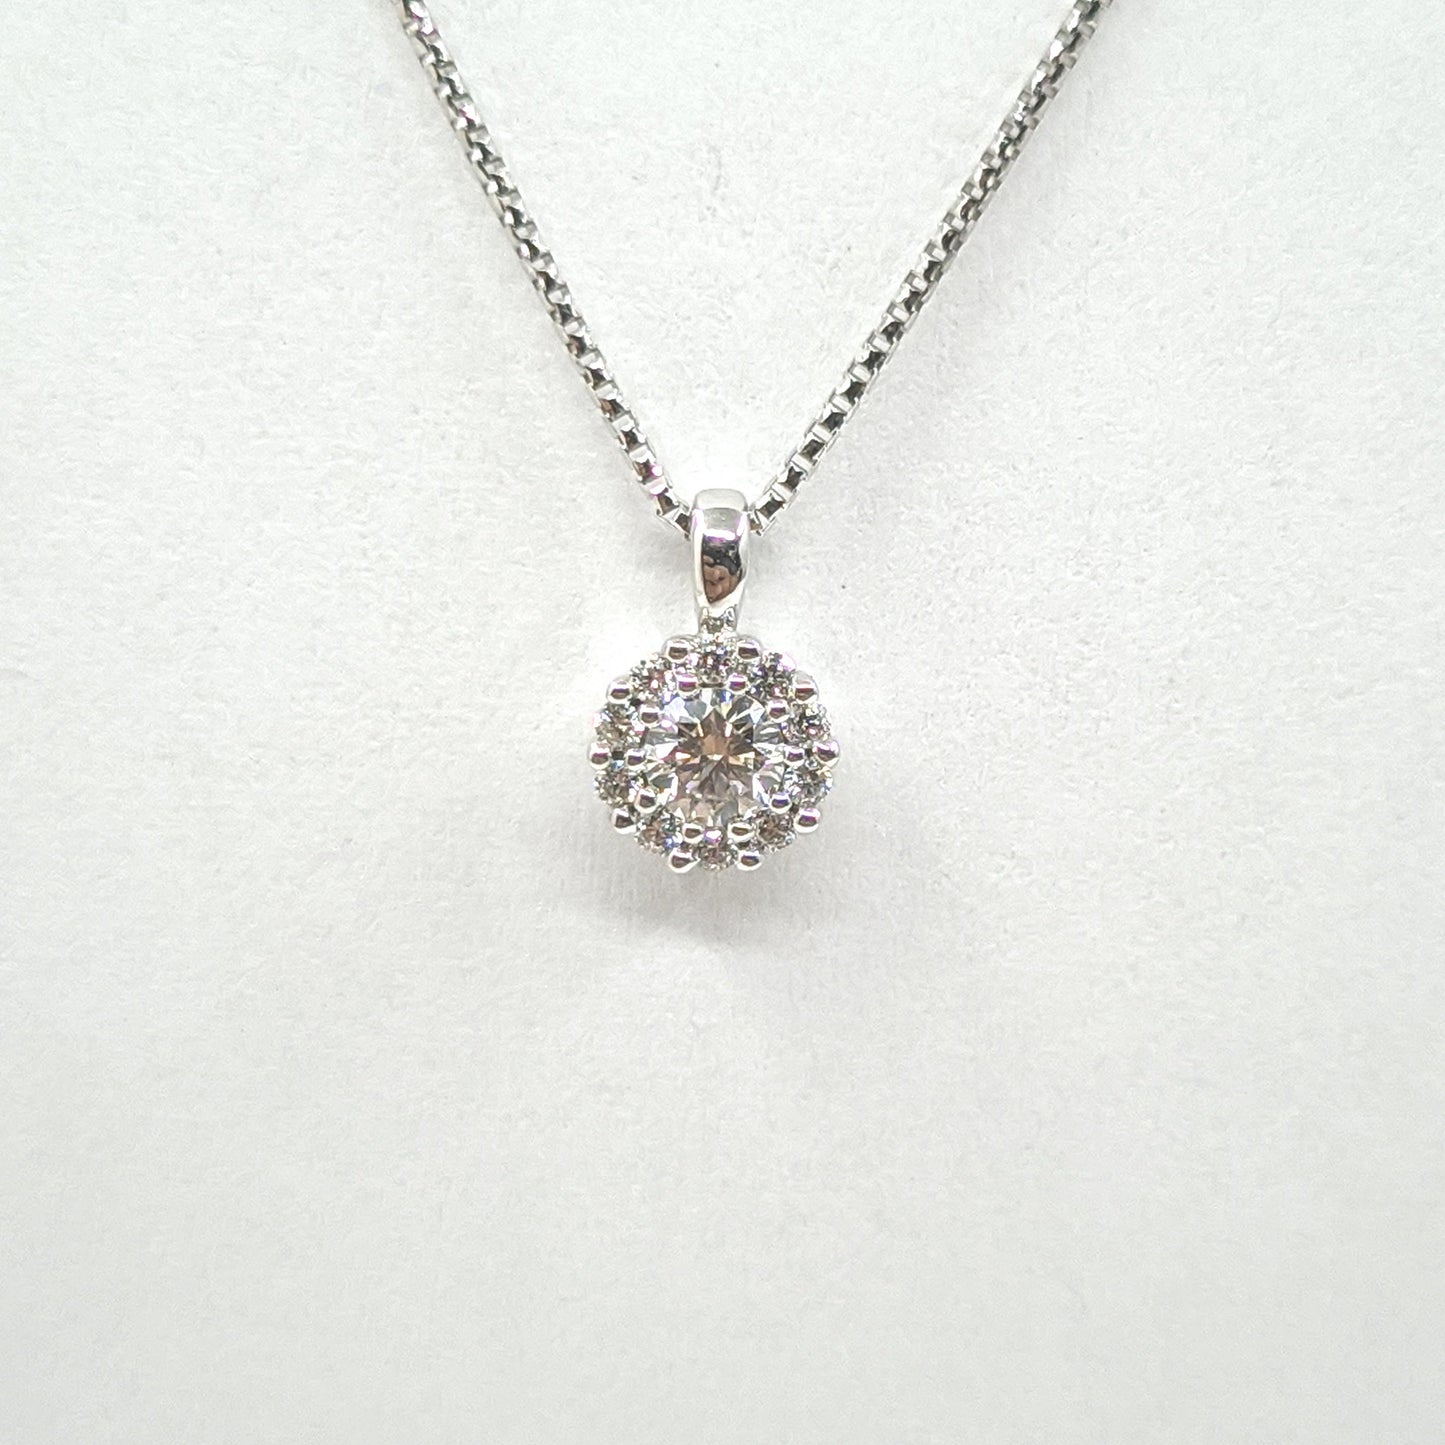 Round Diamond Pendant/ Diamond Cluster / Natural  White Diamond Pendent / 14K Gold Diamond Necklace Anniversary Gift /Gift for Her